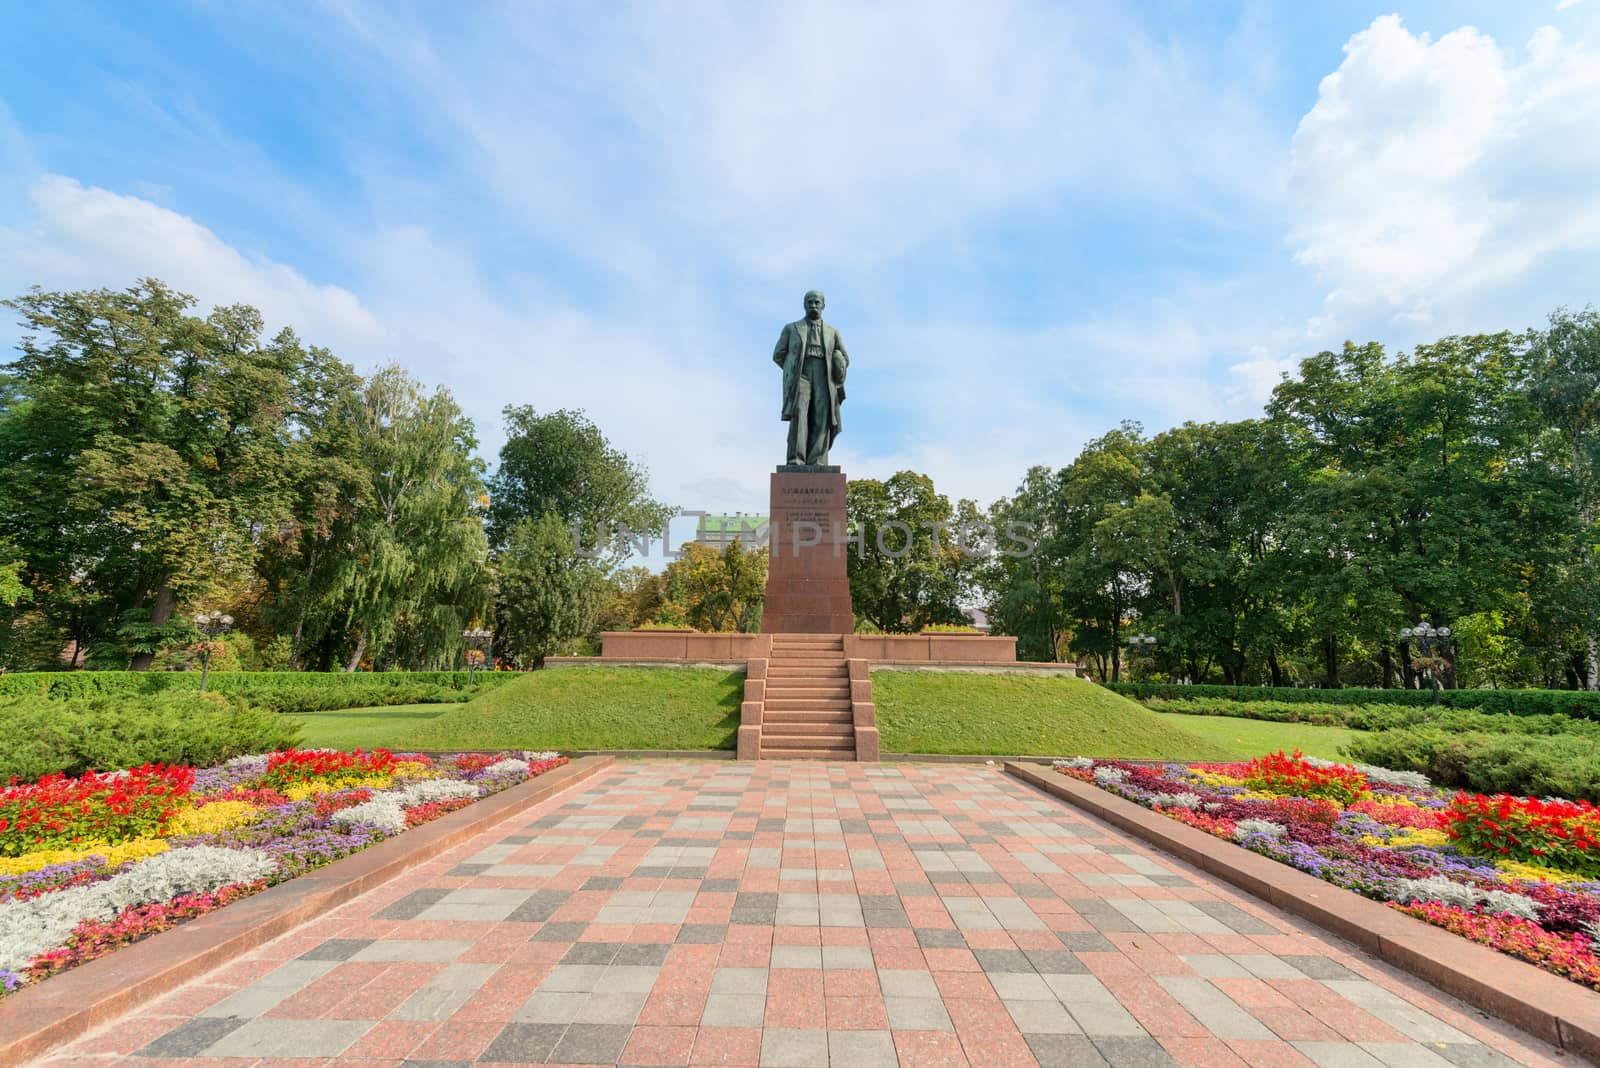 Taras Shevchenko monument in Shevchenko park, Kyiv, Ukraine by iryna_rasko